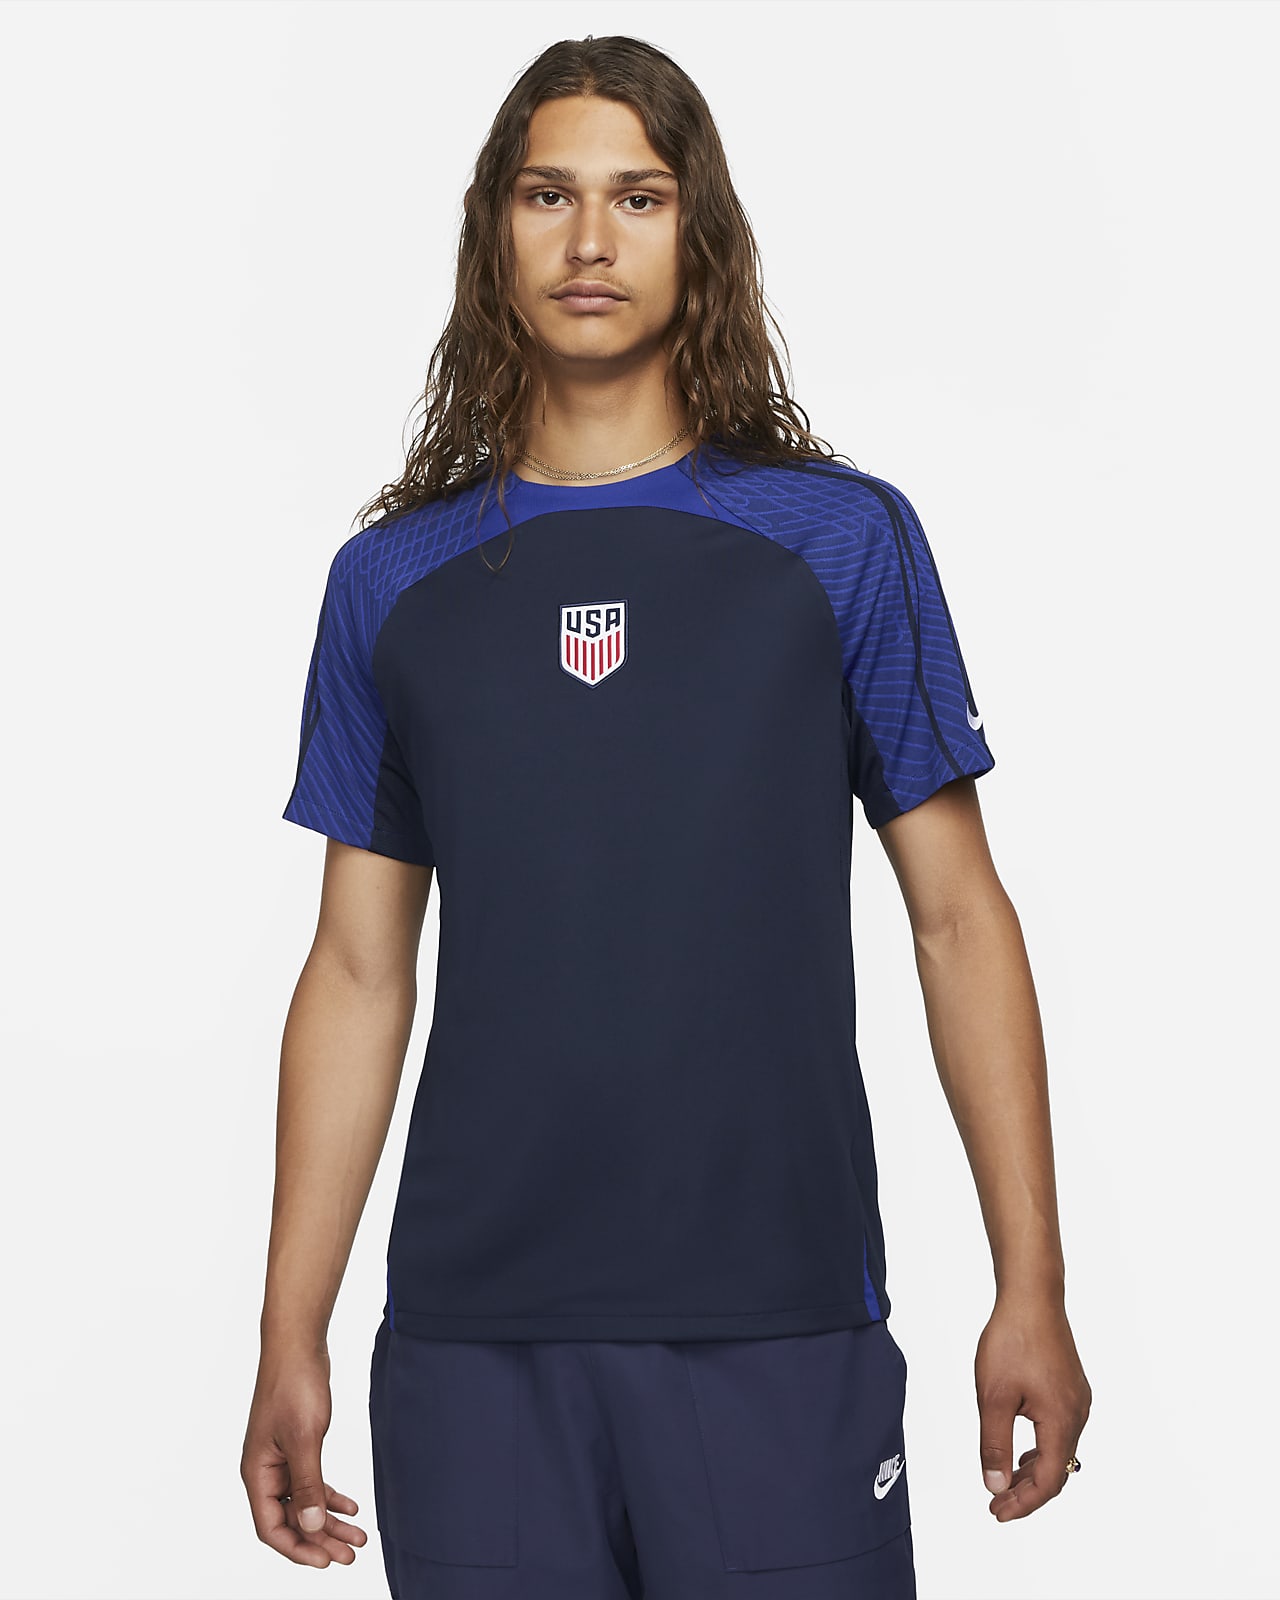 Elevado Salida destacar U.S. Strike Men's Nike Dri-FIT Short-Sleeve Soccer Top. Nike.com